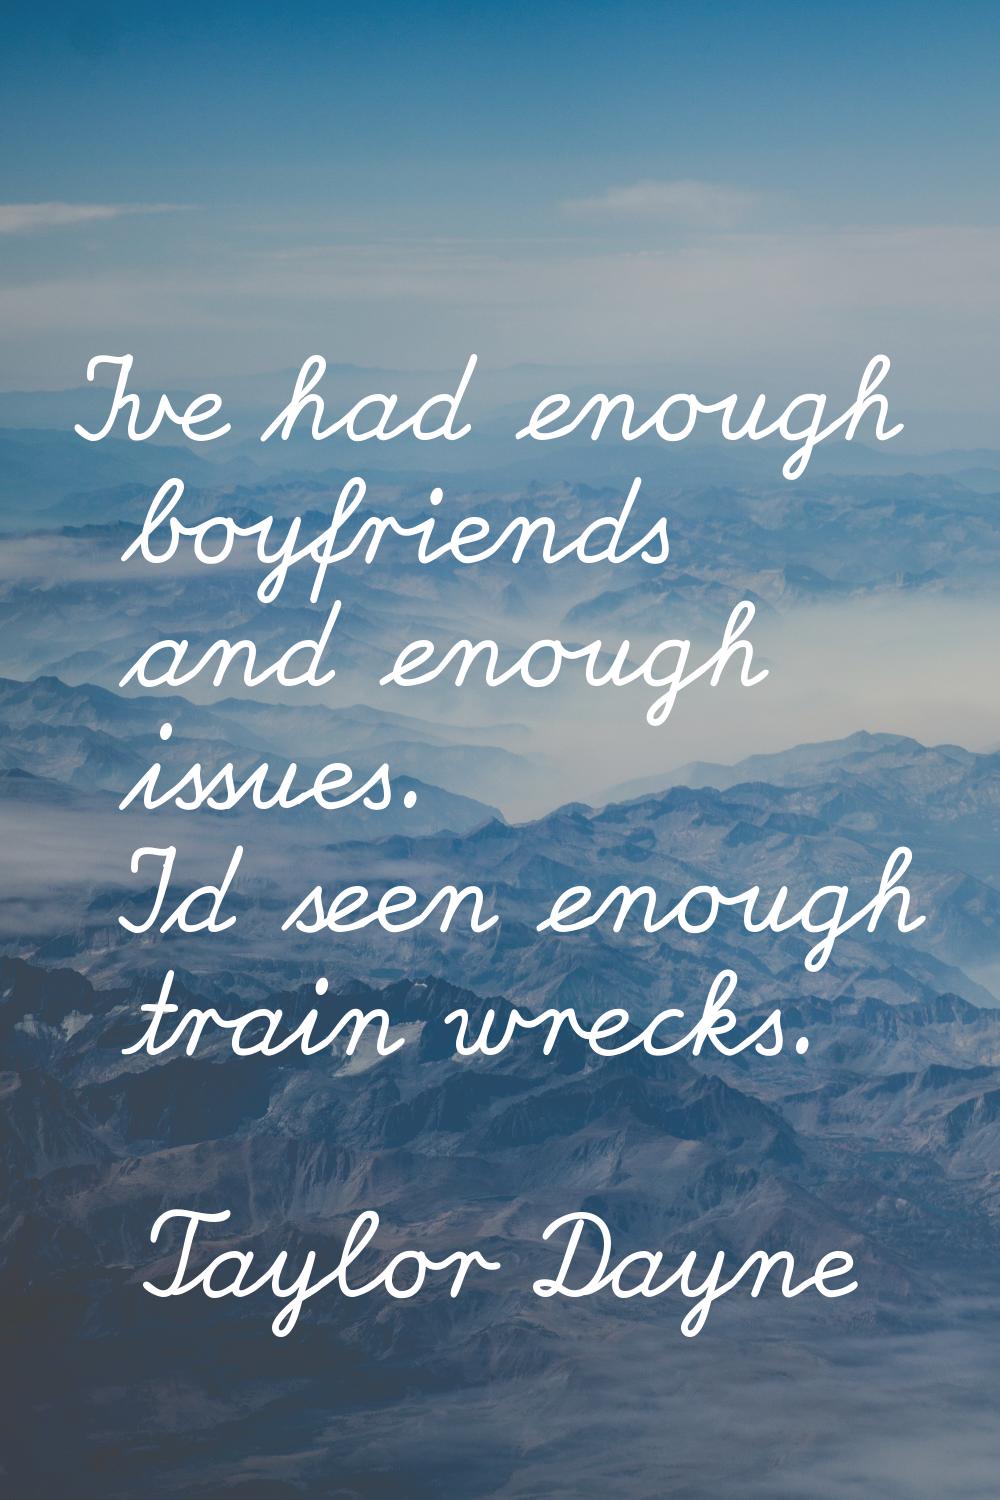 I've had enough boyfriends and enough issues. I'd seen enough train wrecks.